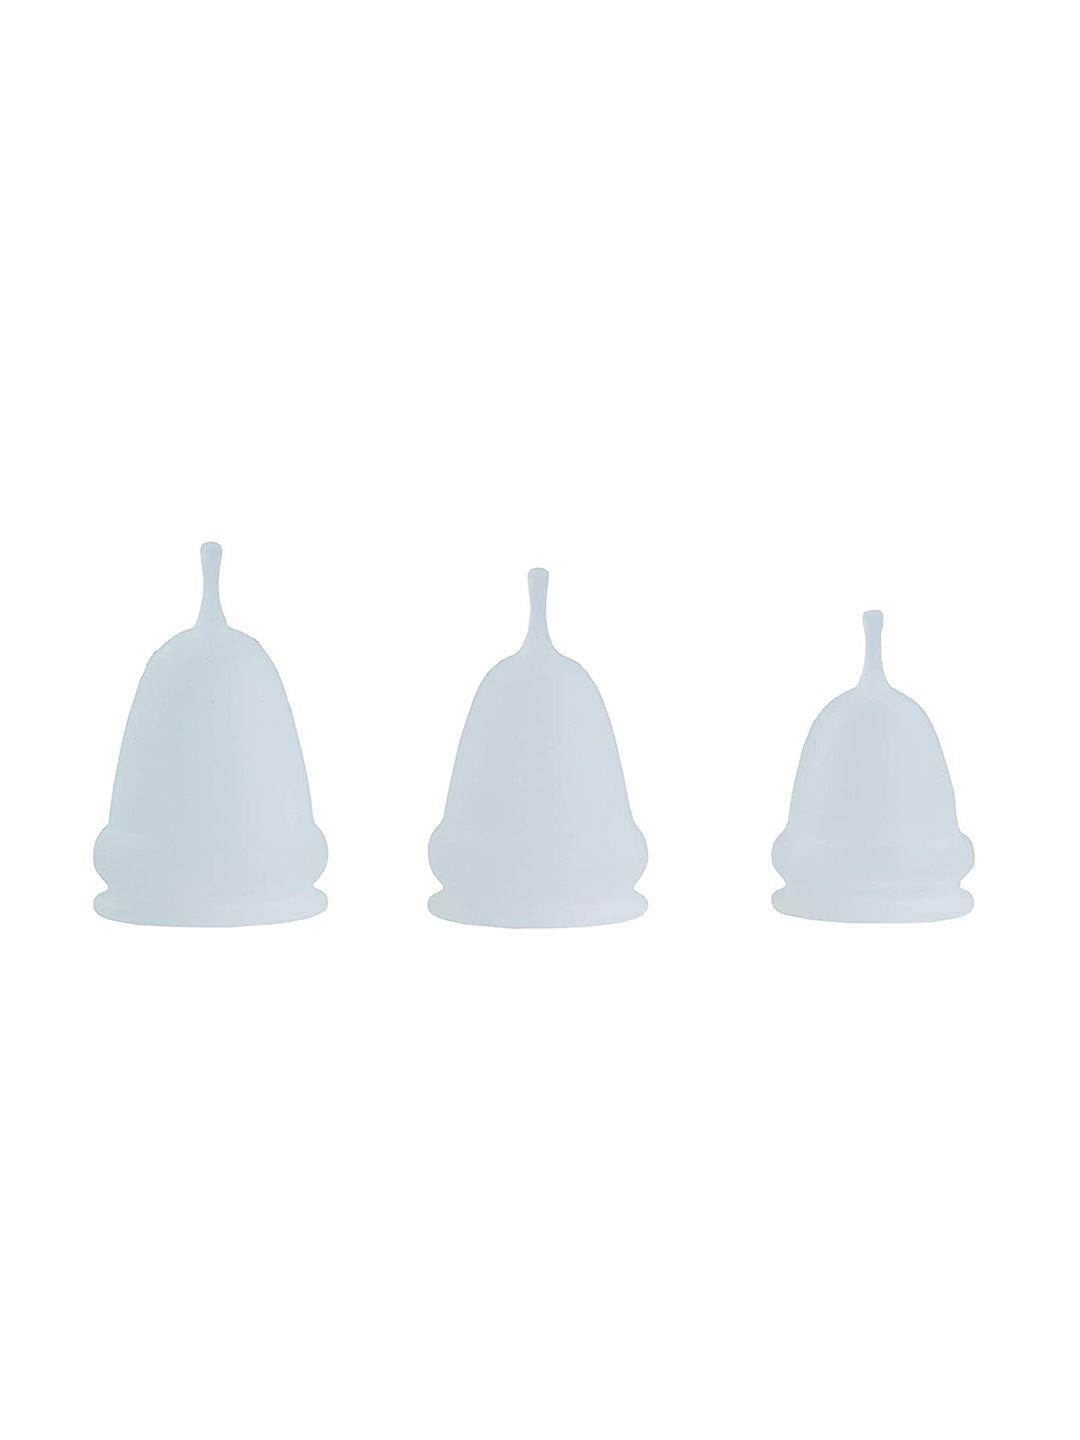 pure cups set of 3 medical grade reusable menstrual cups - small + medium + large